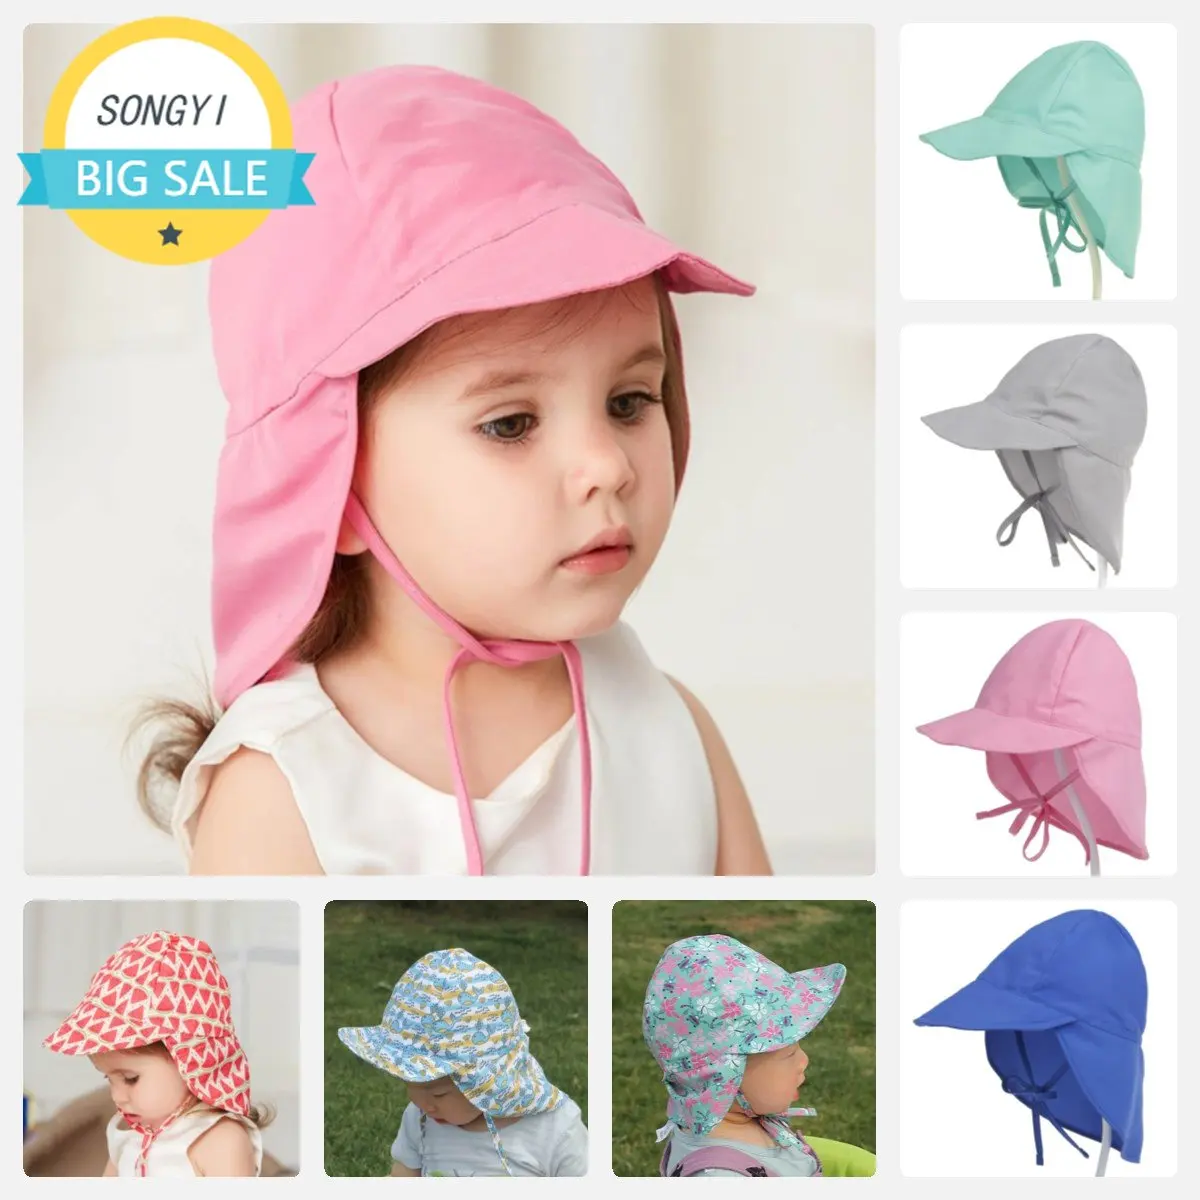 SPF 50+ Baby Sun Hat Adjustable Summer Cap Outdoor Travel Beach Sun Protection Hat Toddler Hat Infant Accessories Children Cap